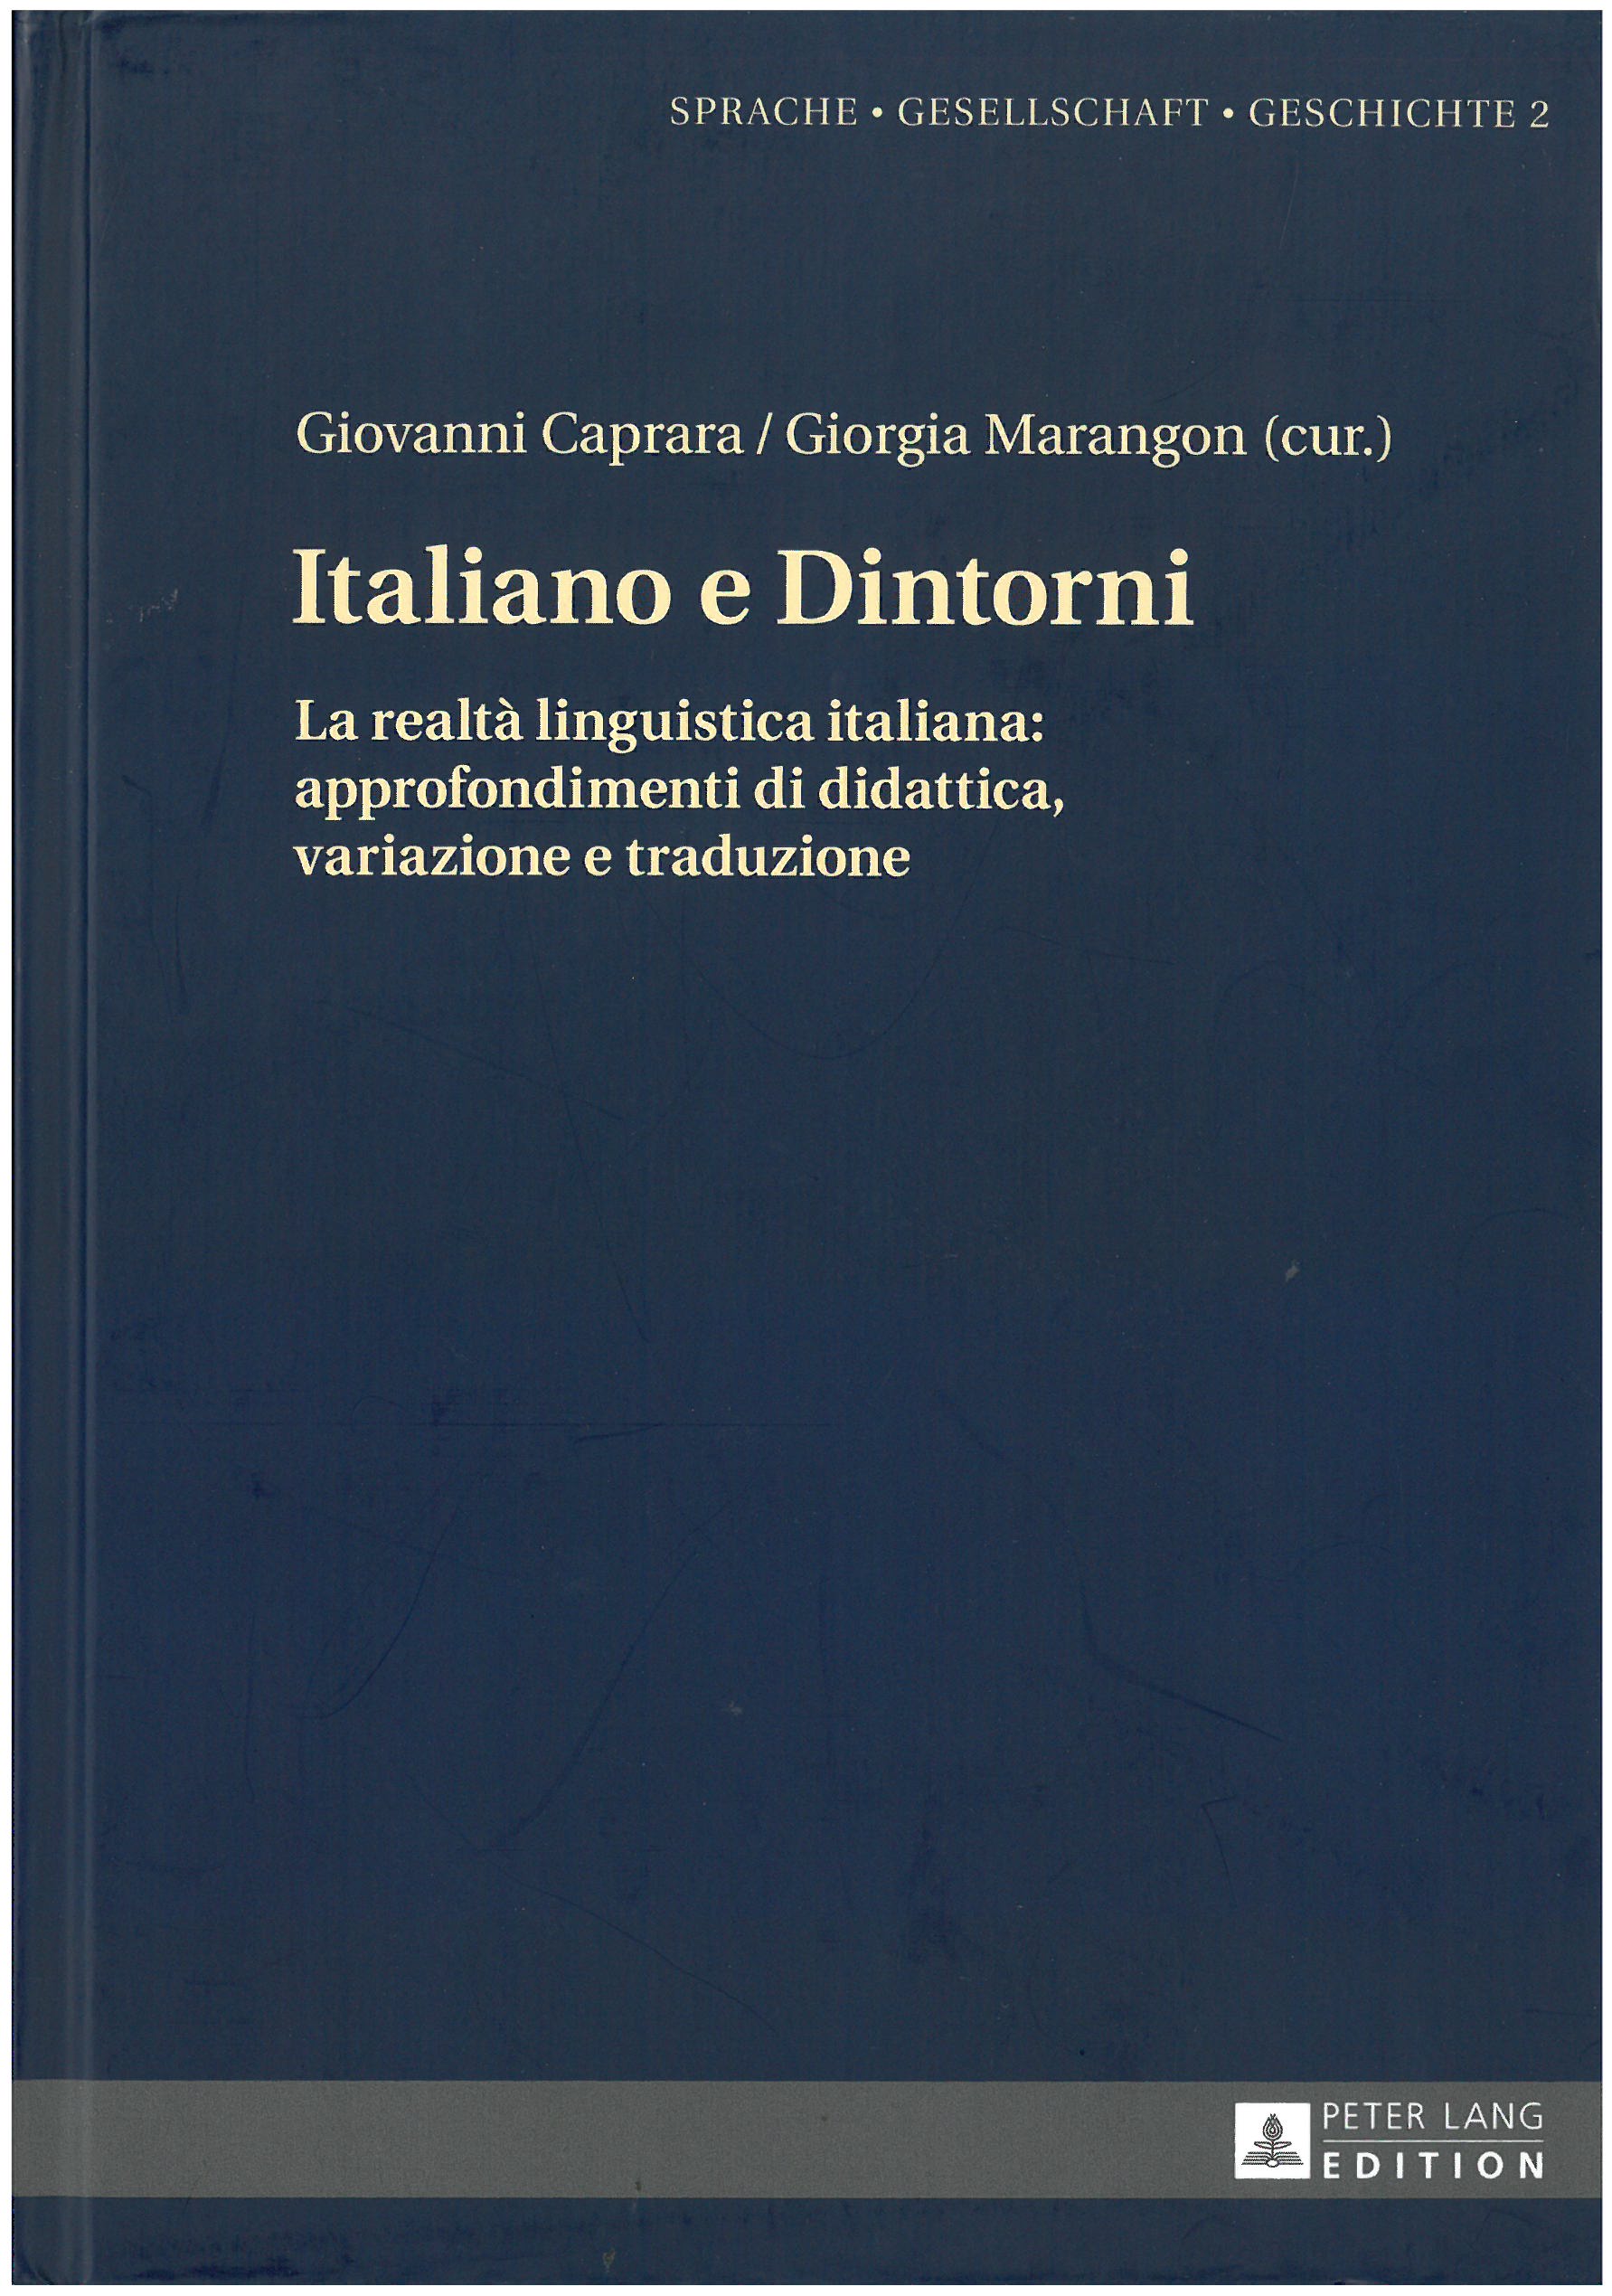 Imagen de portada del libro Italiano e dintorni